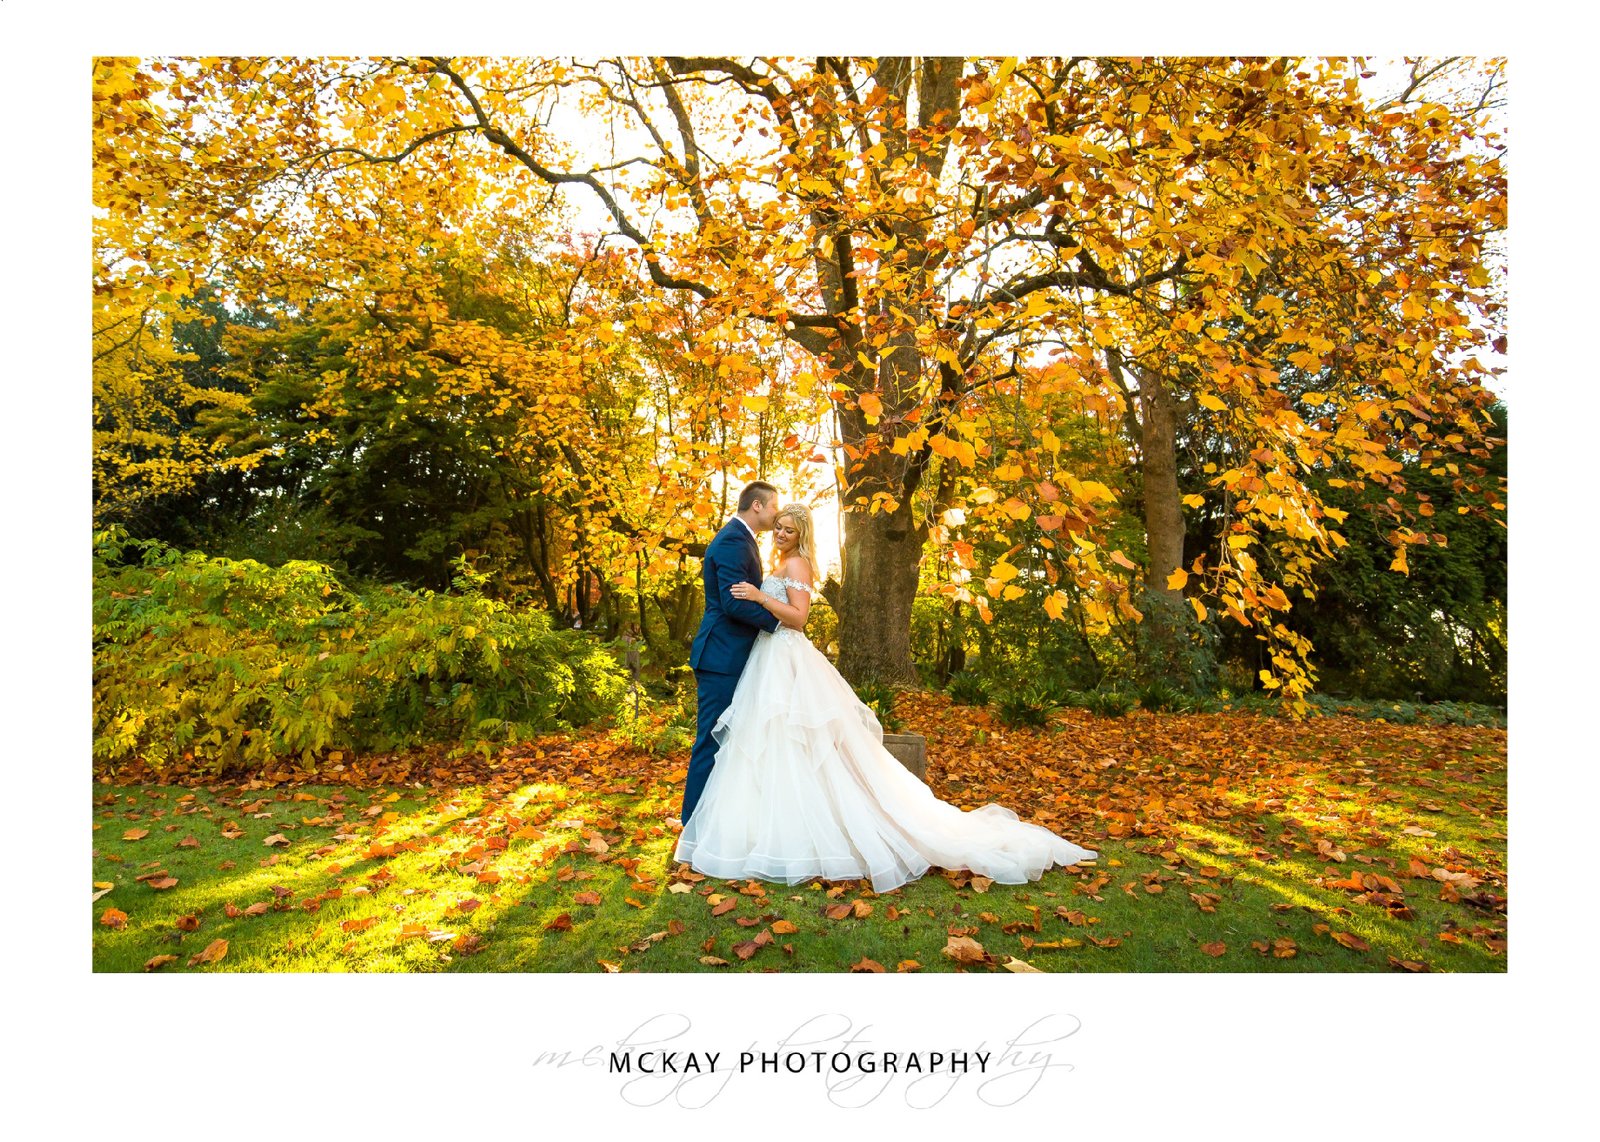 Ella & James Autumn wedding at Milton Park